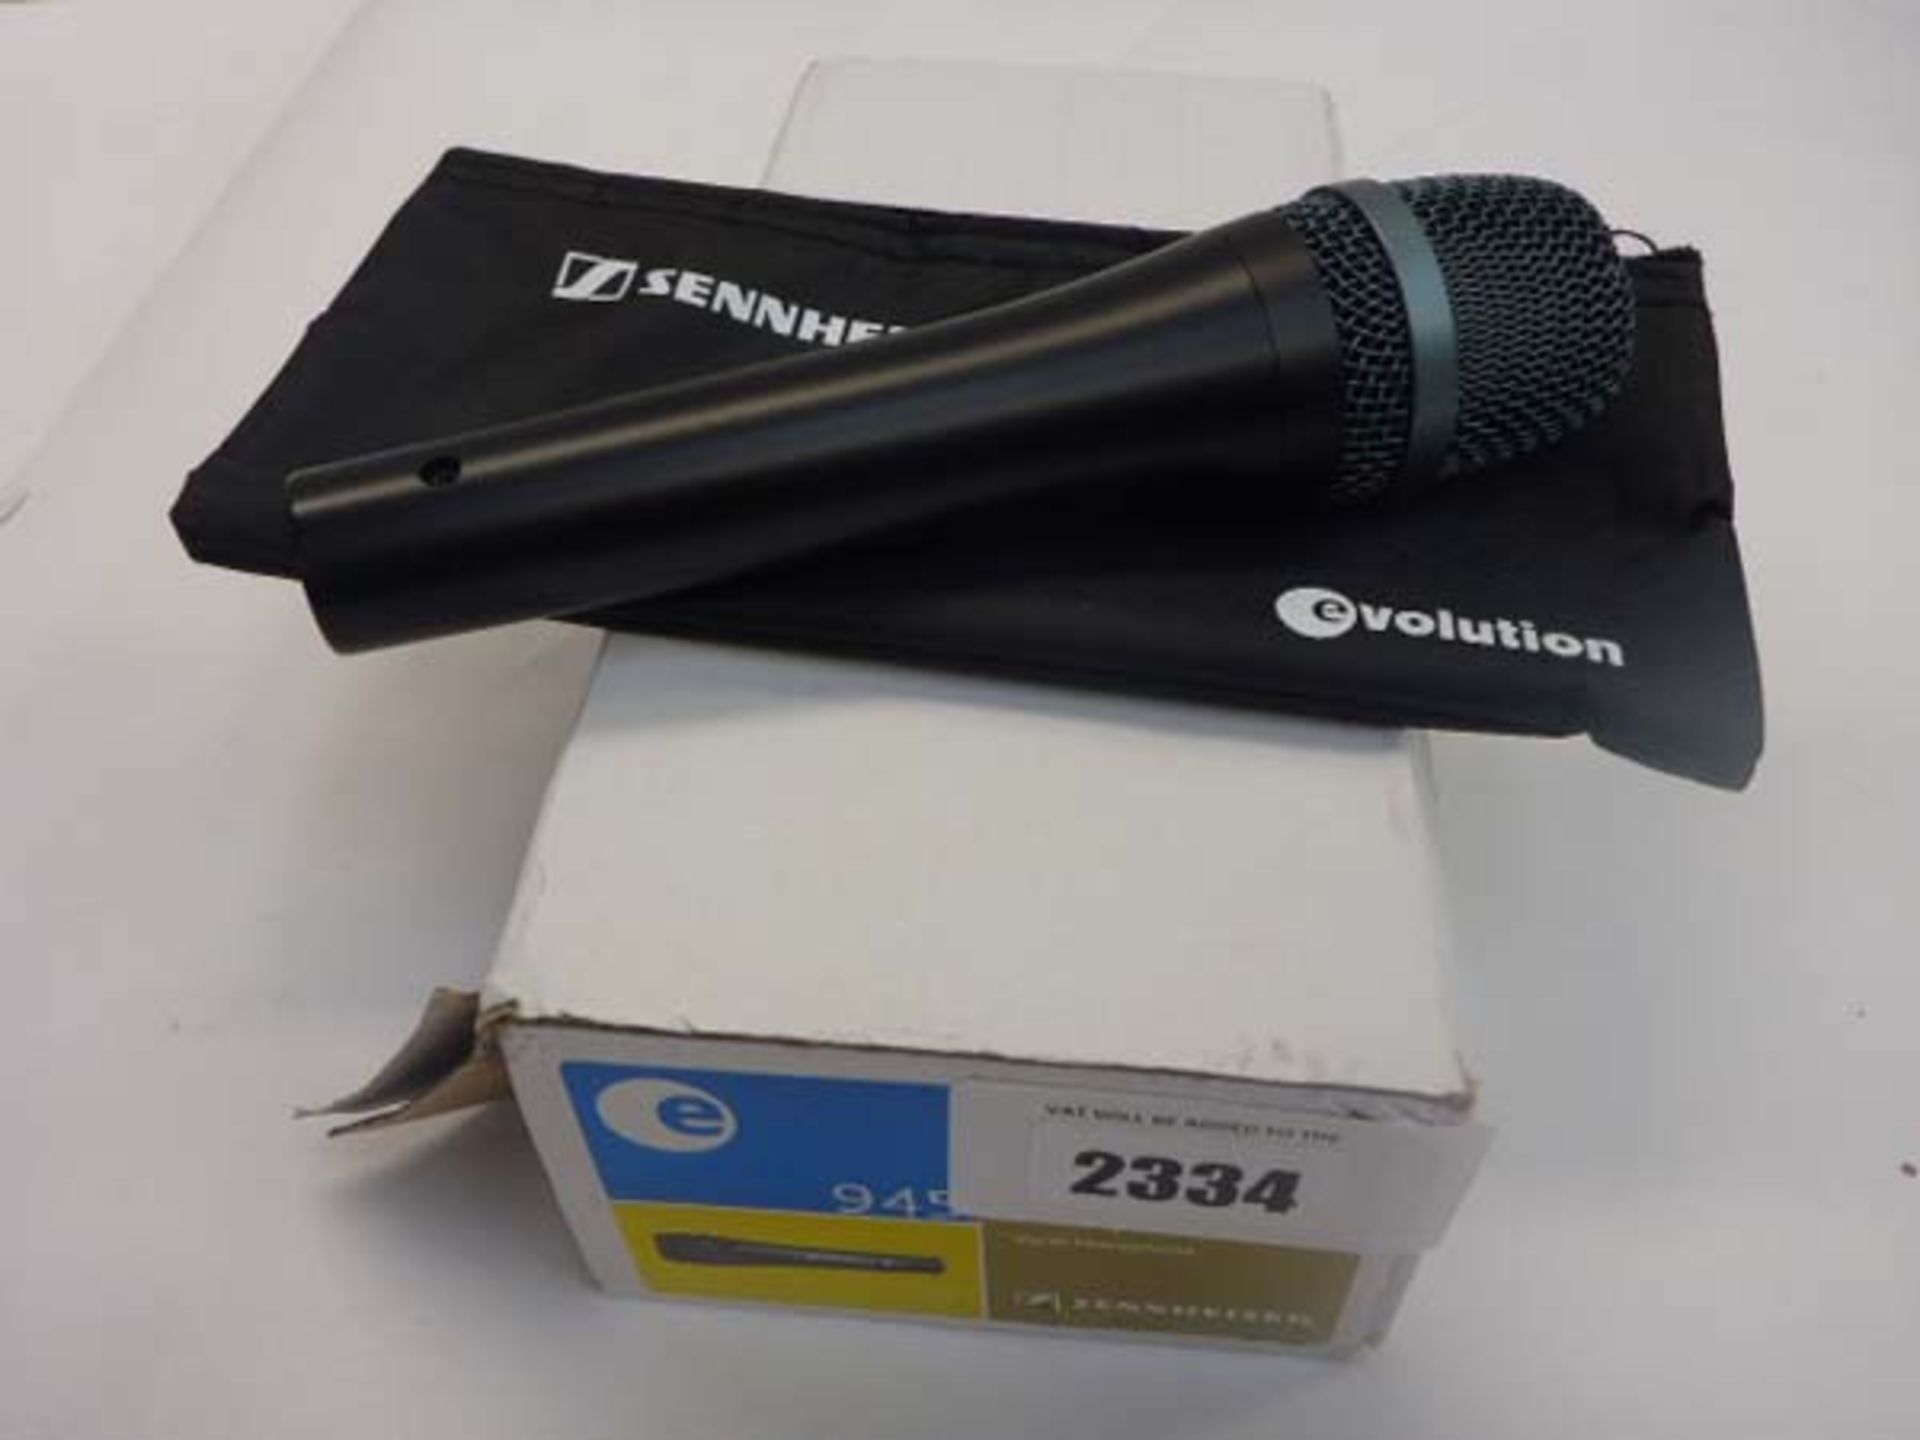 Sennheiser Evolution 945 microphone.